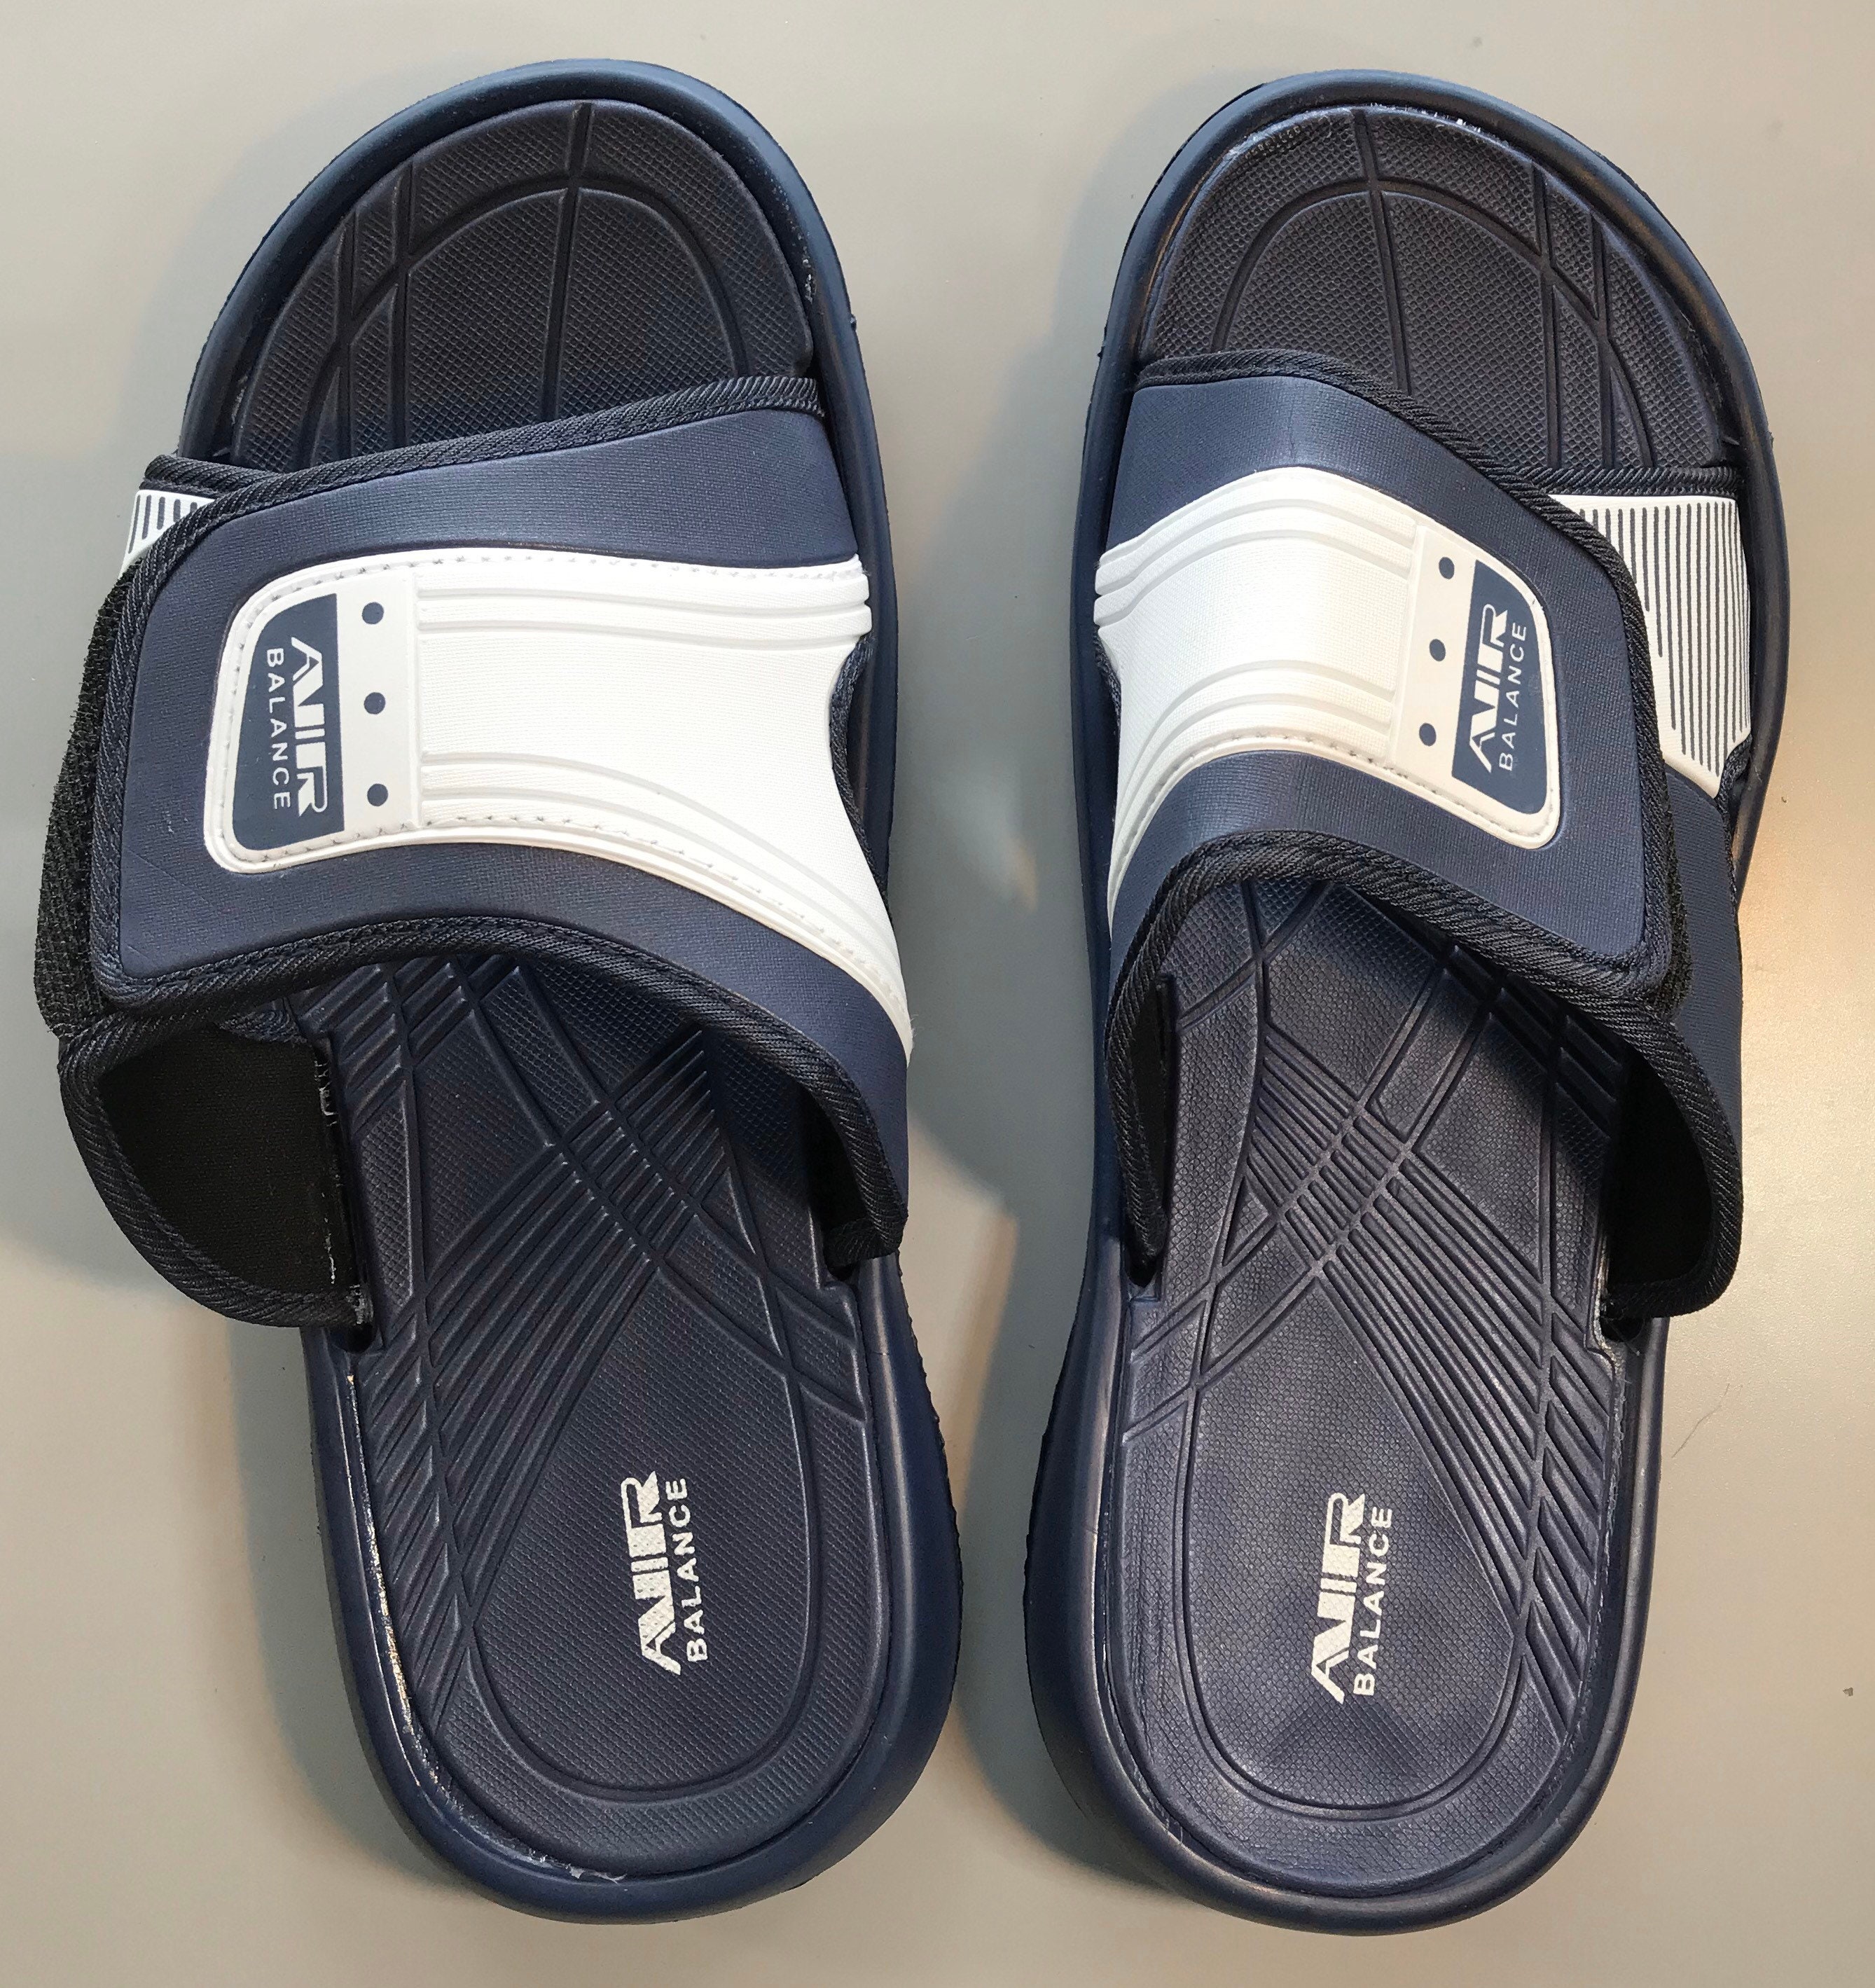 Gett Wett Slides Navy and White by Air Balance Slide Sandals